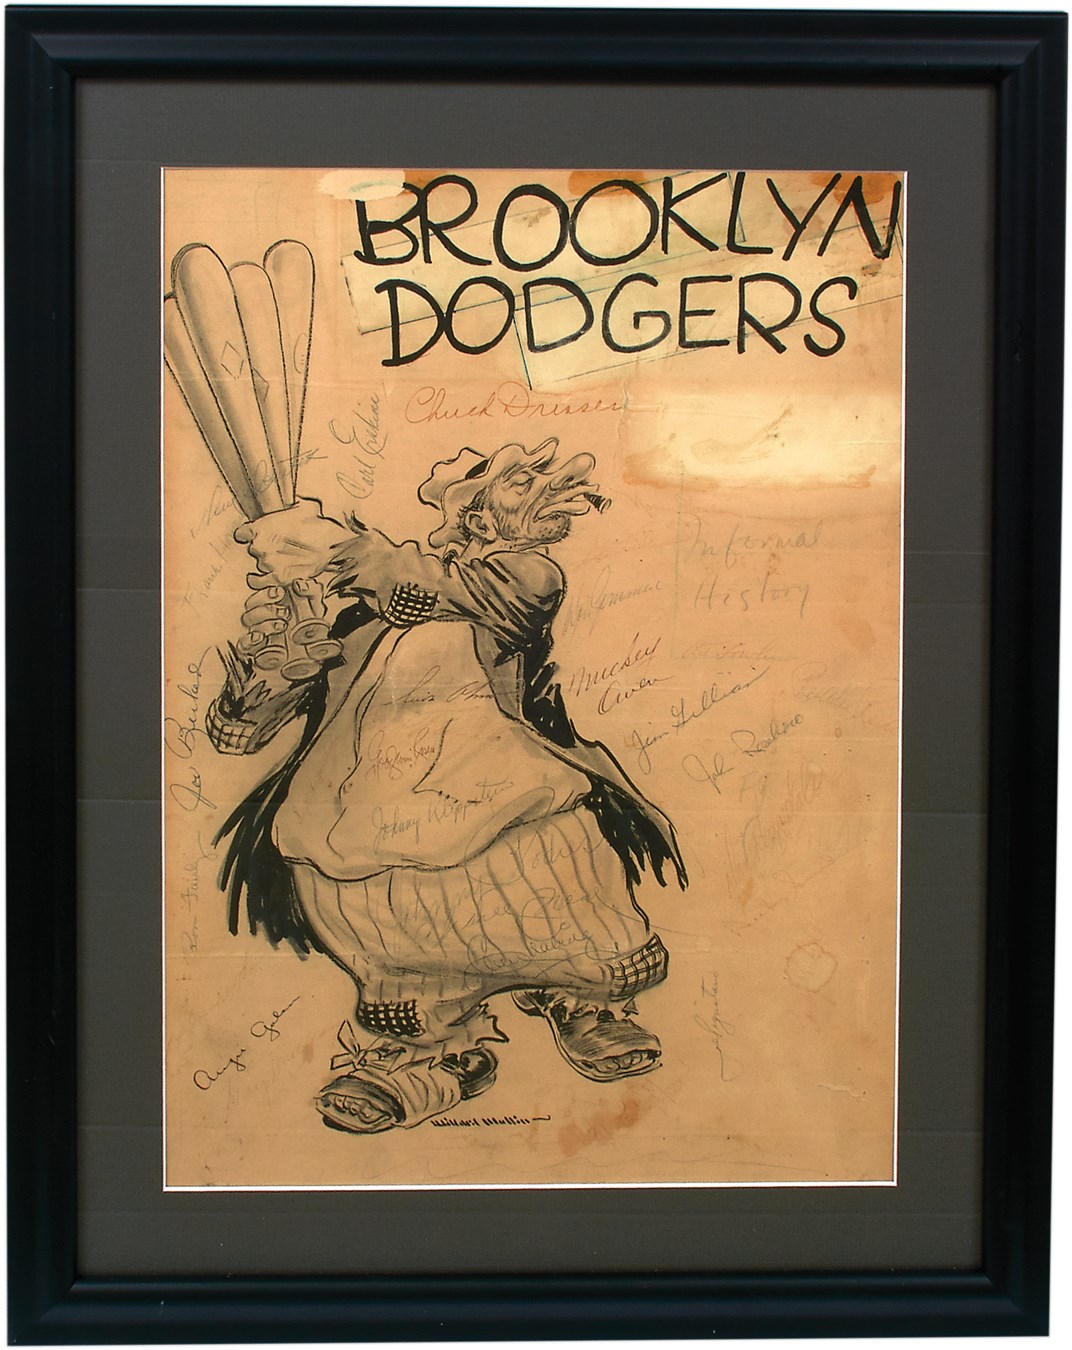 Jackie Robinson & Brooklyn Dodgers - Brooklyn Dodgers "Bum" Custom Artwork by Willard Mullin - Team Signed with Early Koufax